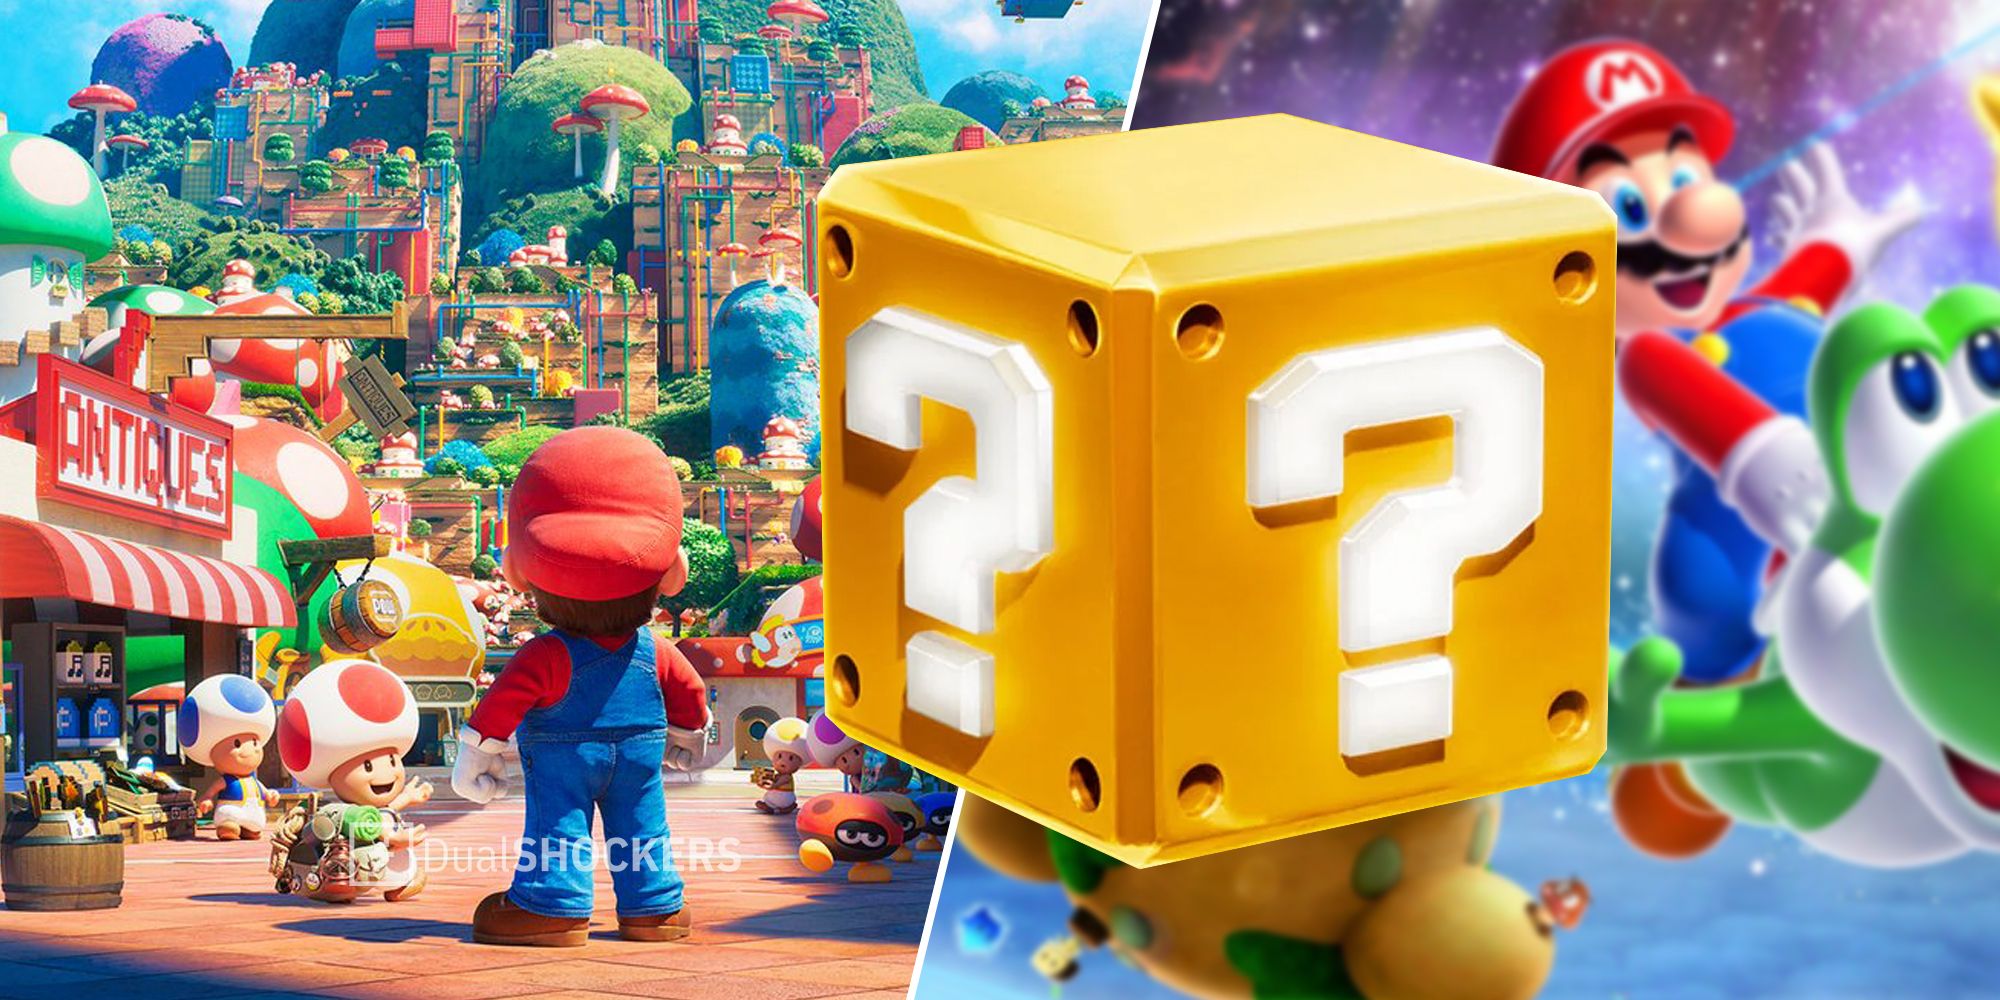 Nintendo Super Mario Bros. Movie poster on left, question block and Super Mario Galaxy on right